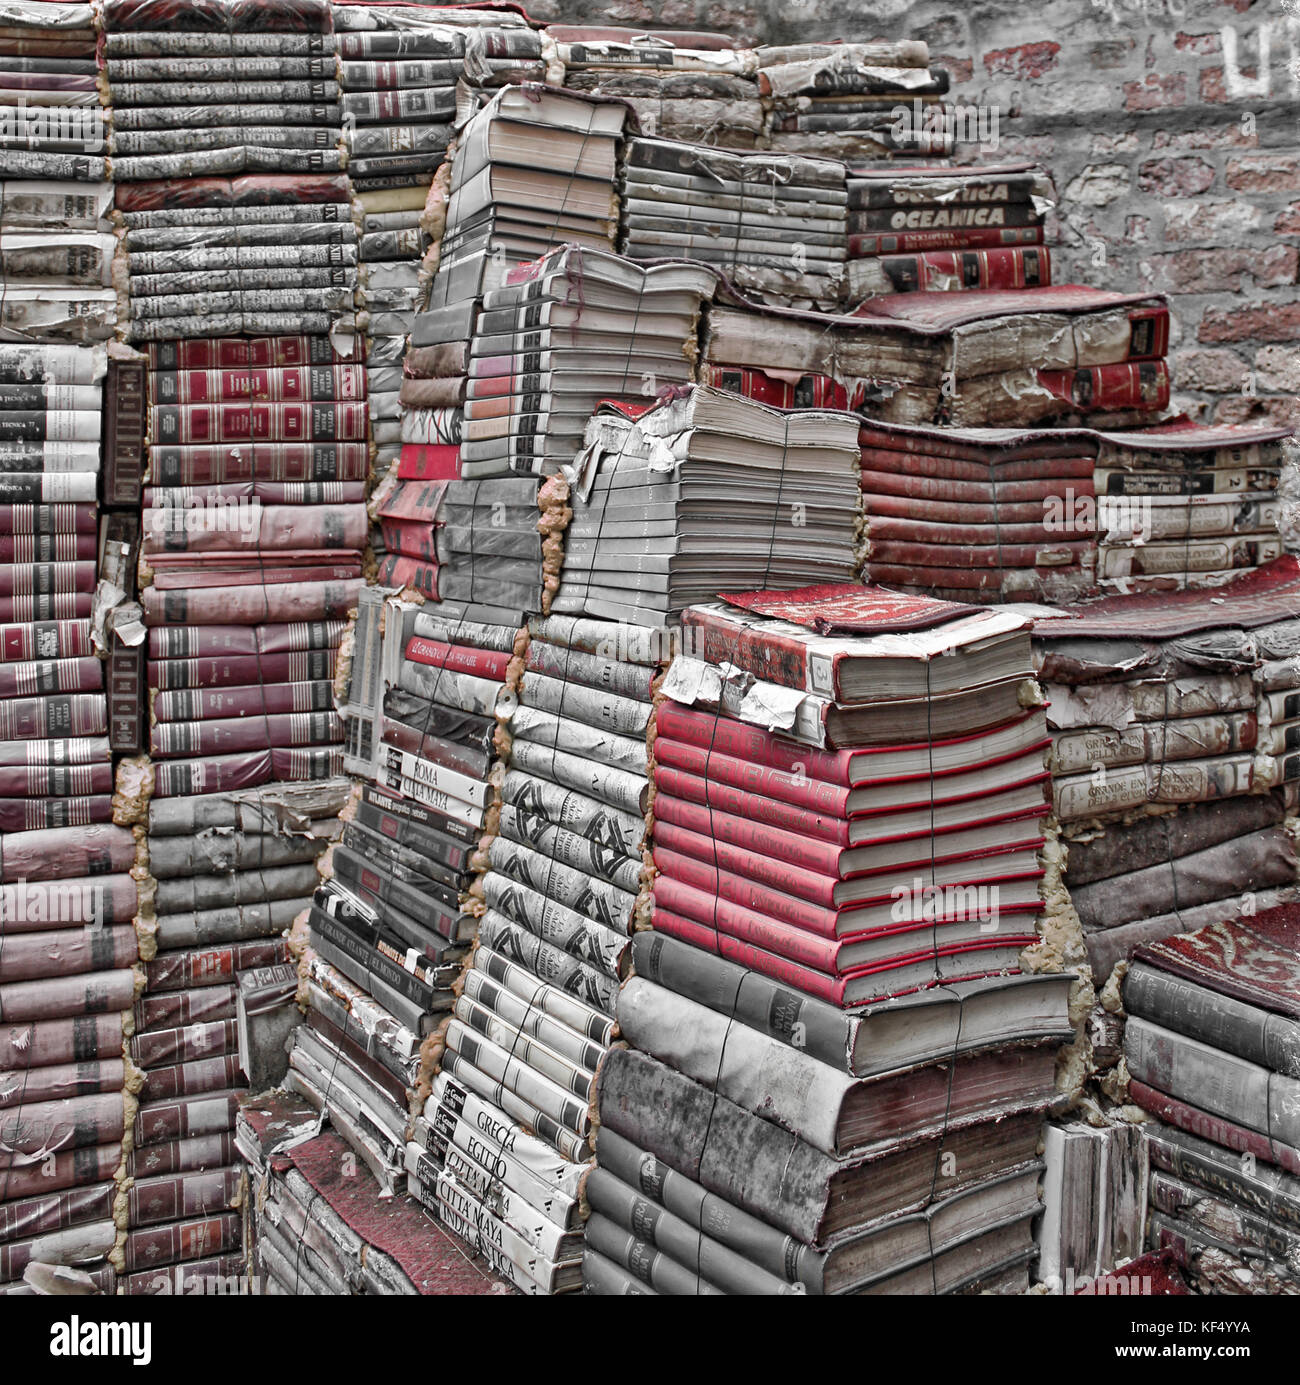 Books piled high. Famous book shop the Acqua Alta, Venice, Italy. Stock Photo